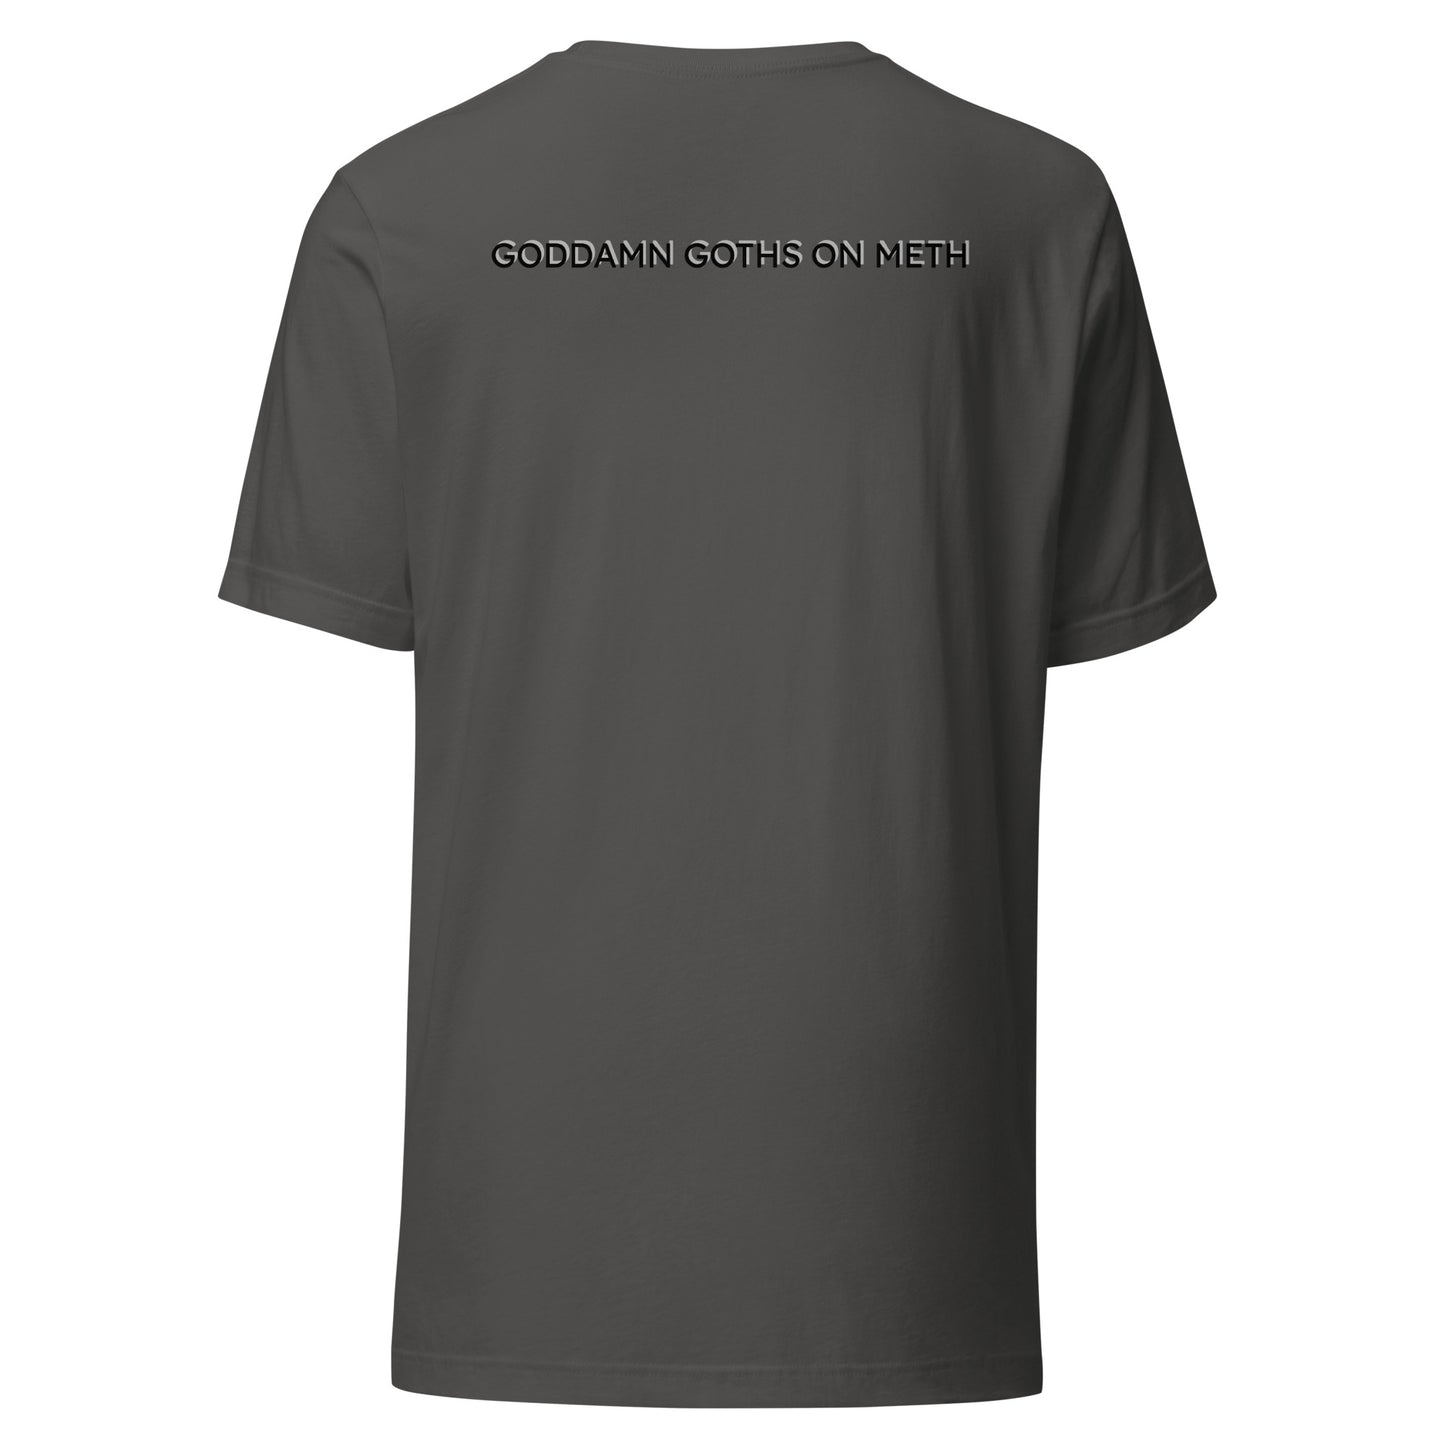 TANG M<ETHOD DONG MOSH - Unisex t-shirt